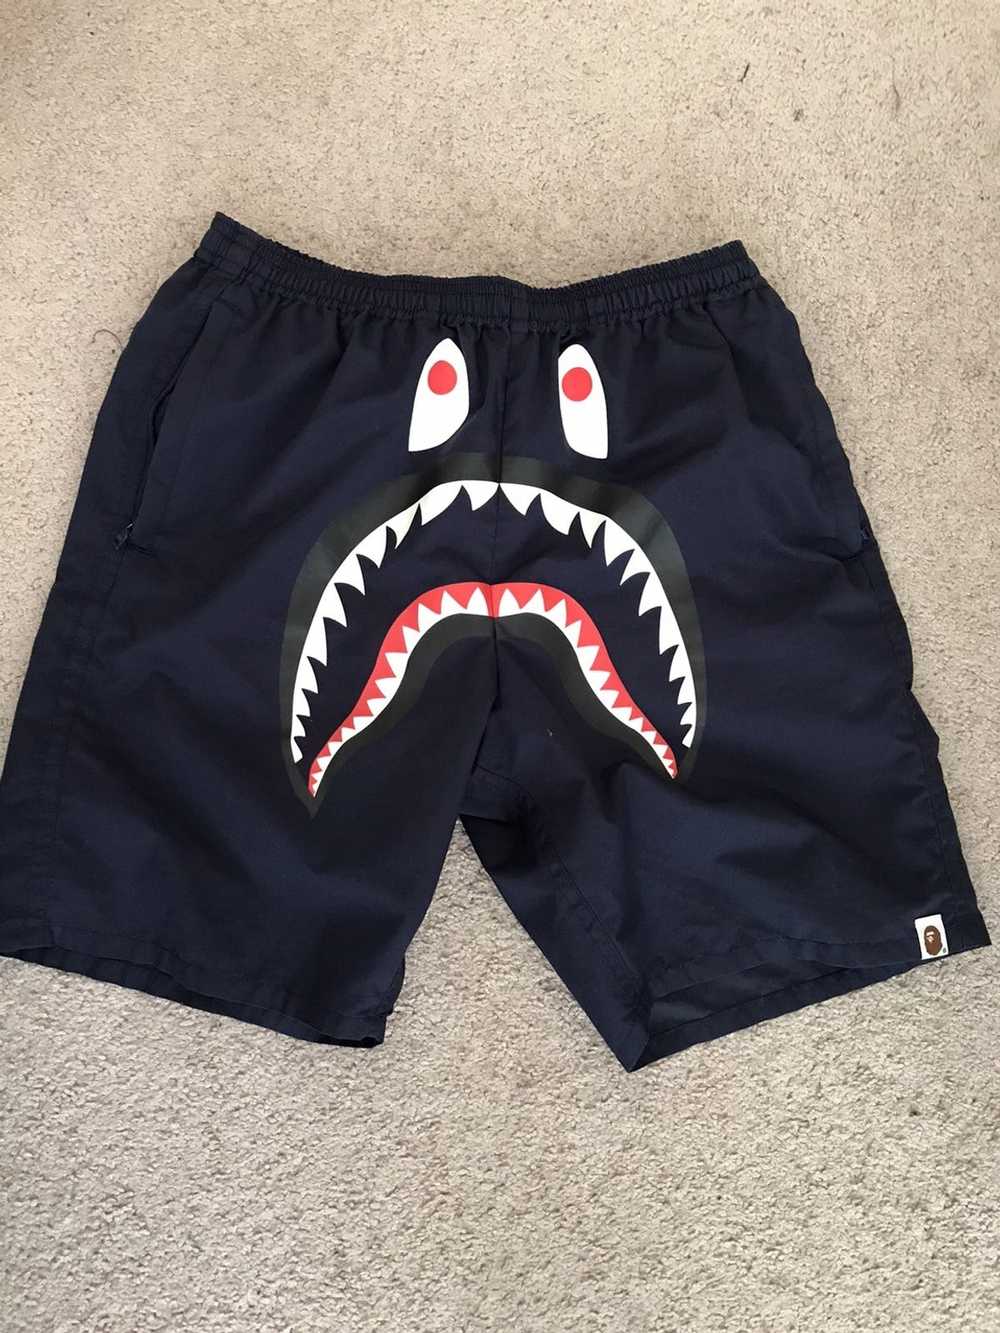 Bape Bape Shark Shorts - image 1